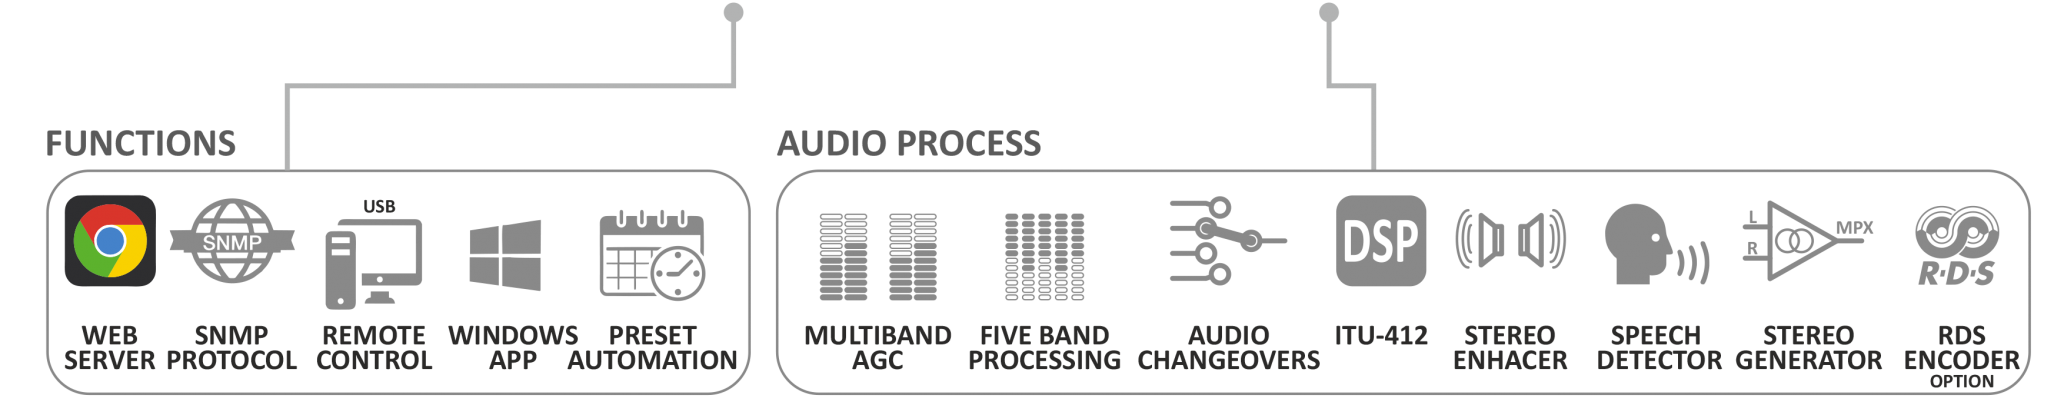 Processeur audio broadcast Falcon XT AxelTech